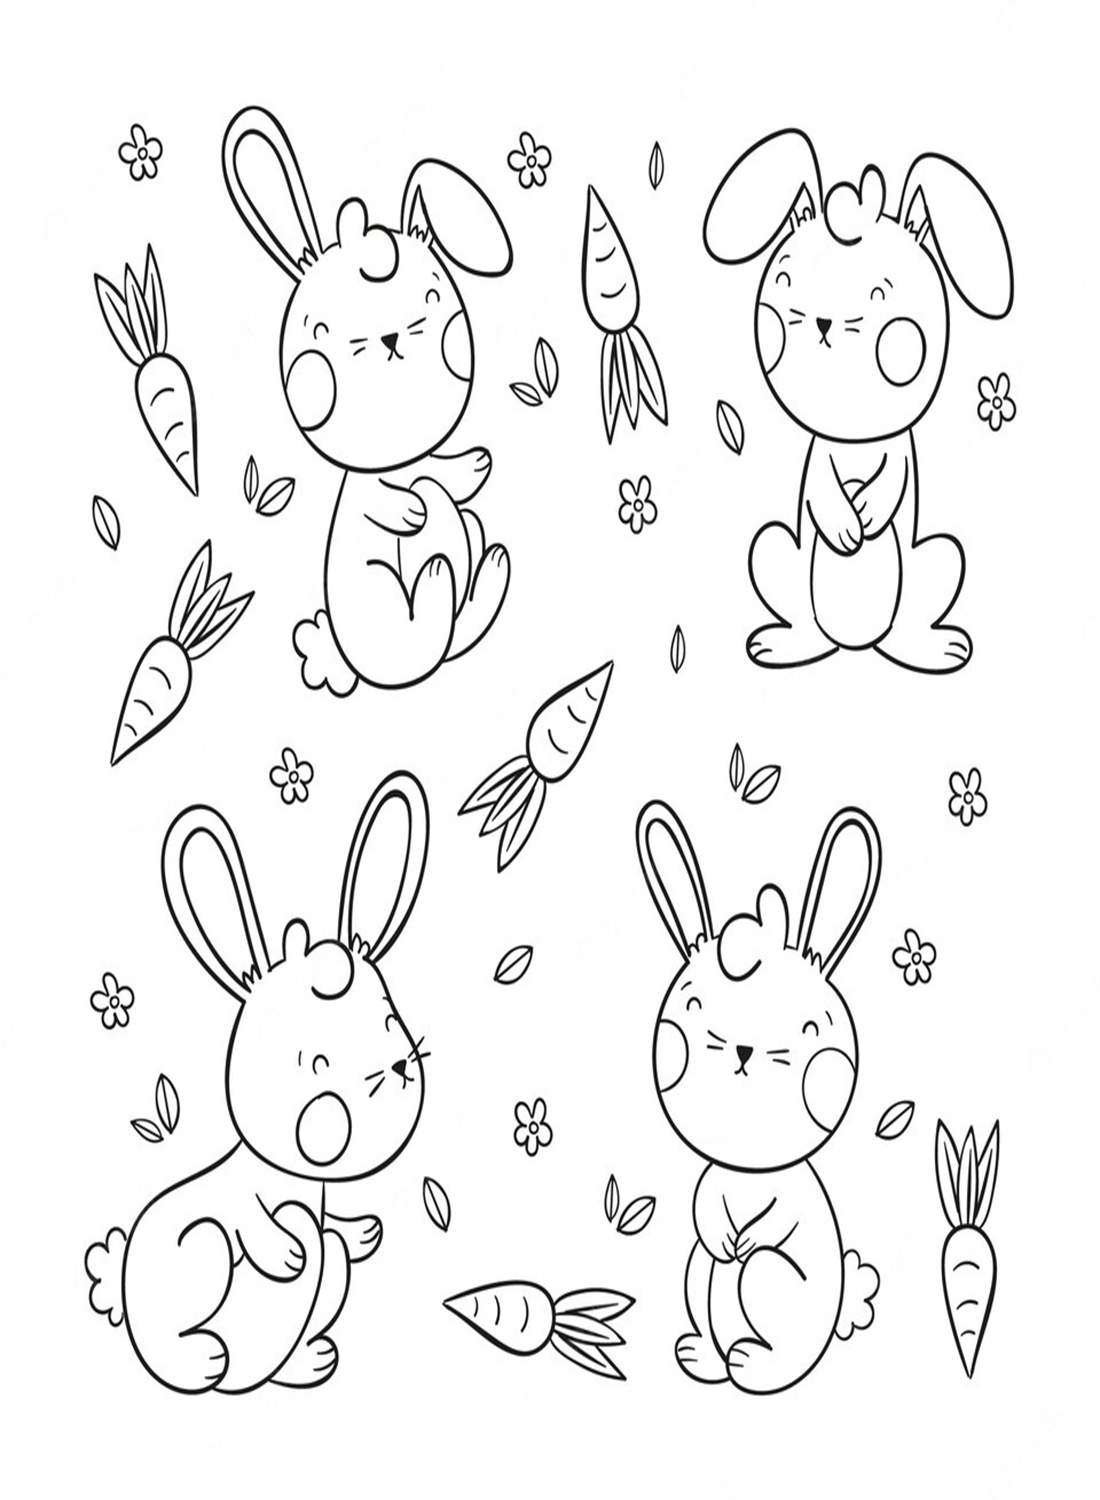 Cute Rabbit Poses from Rabbit